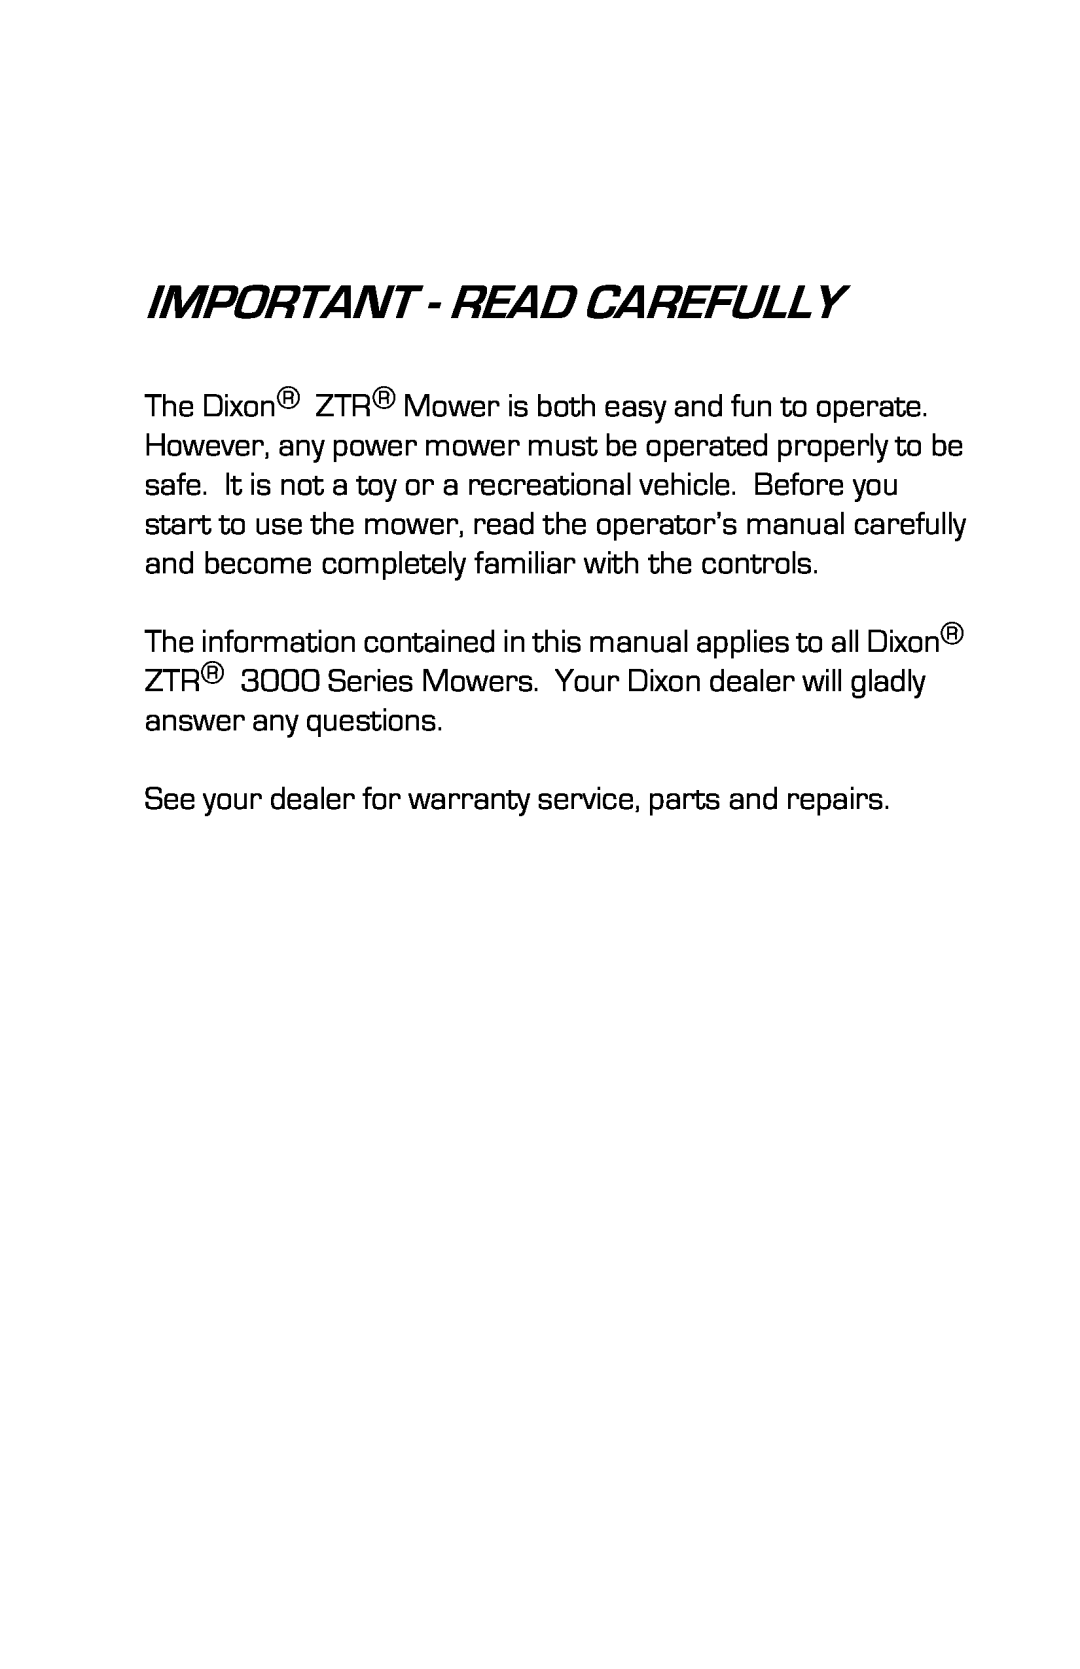 Dixon ZTR 3363, 13631-0702 manual Important - Read Carefully 